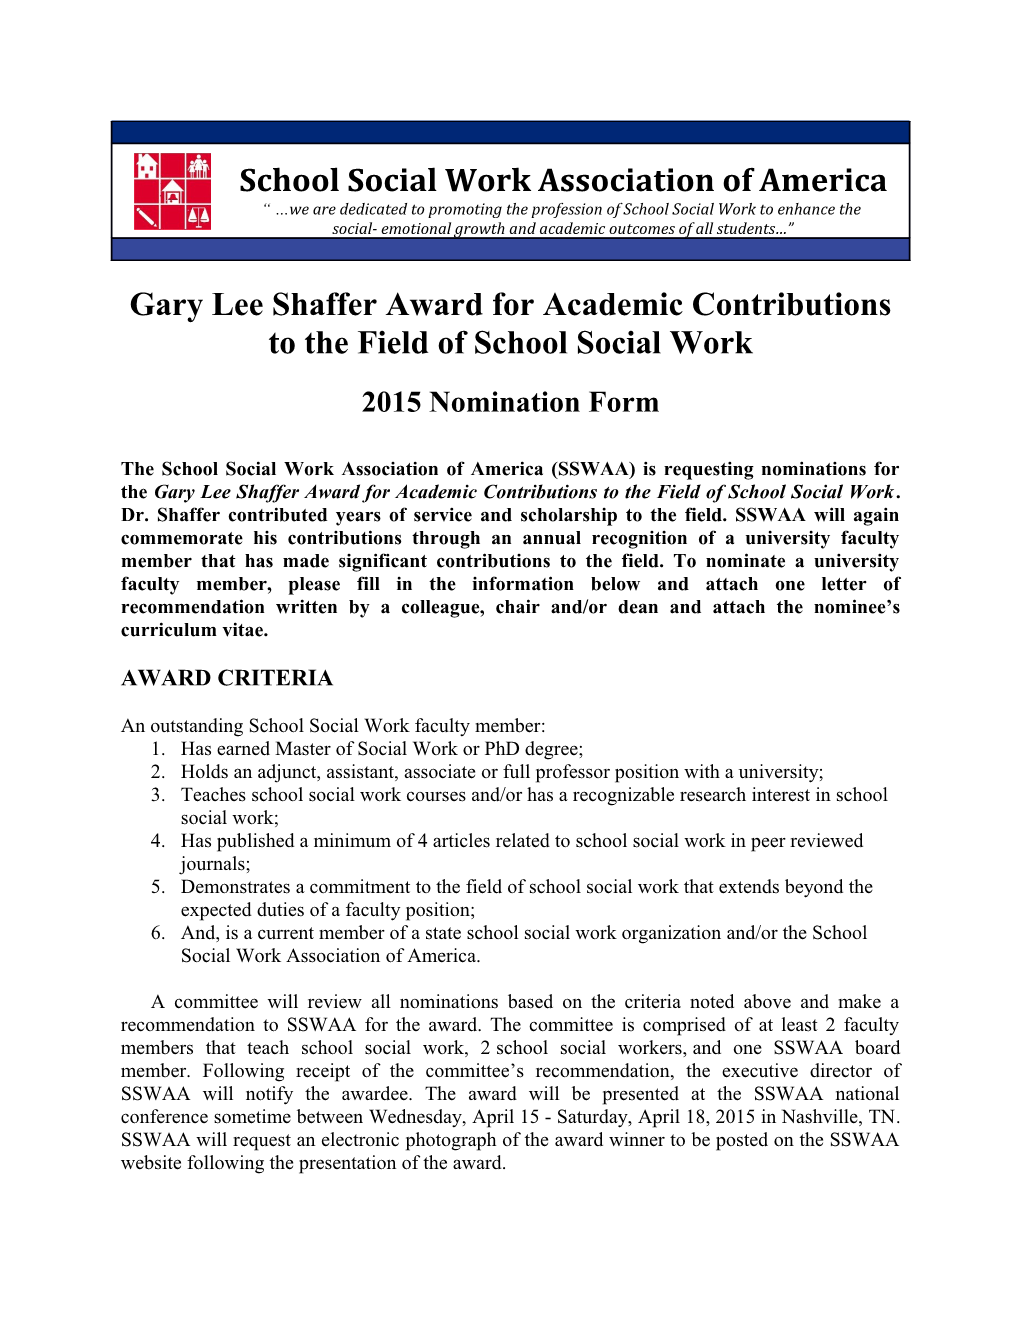 Indiana School Social Work Association